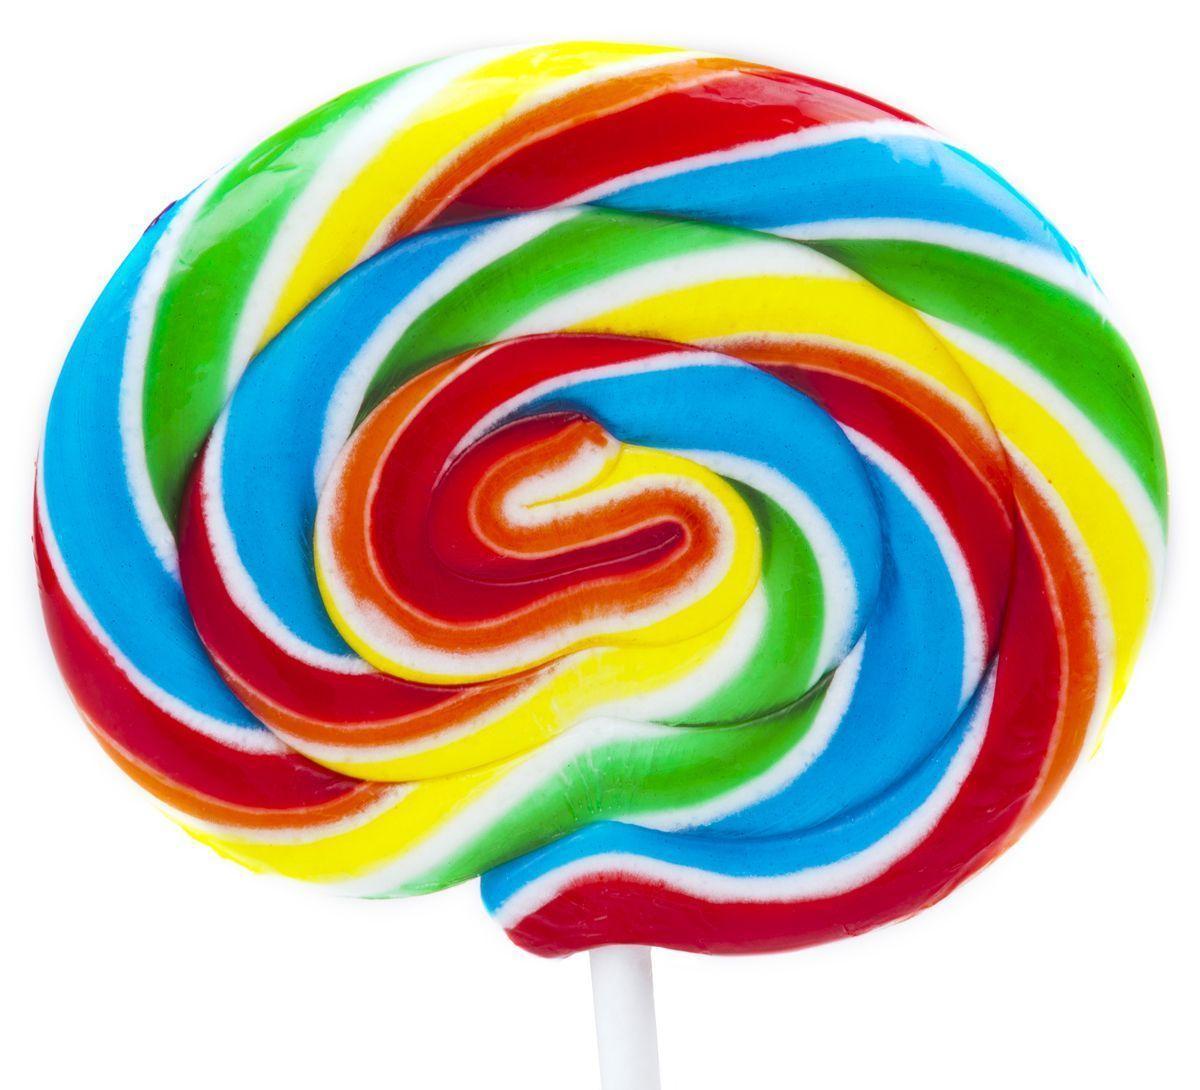 Lollipop Swirl Wallpaper Image & Picture